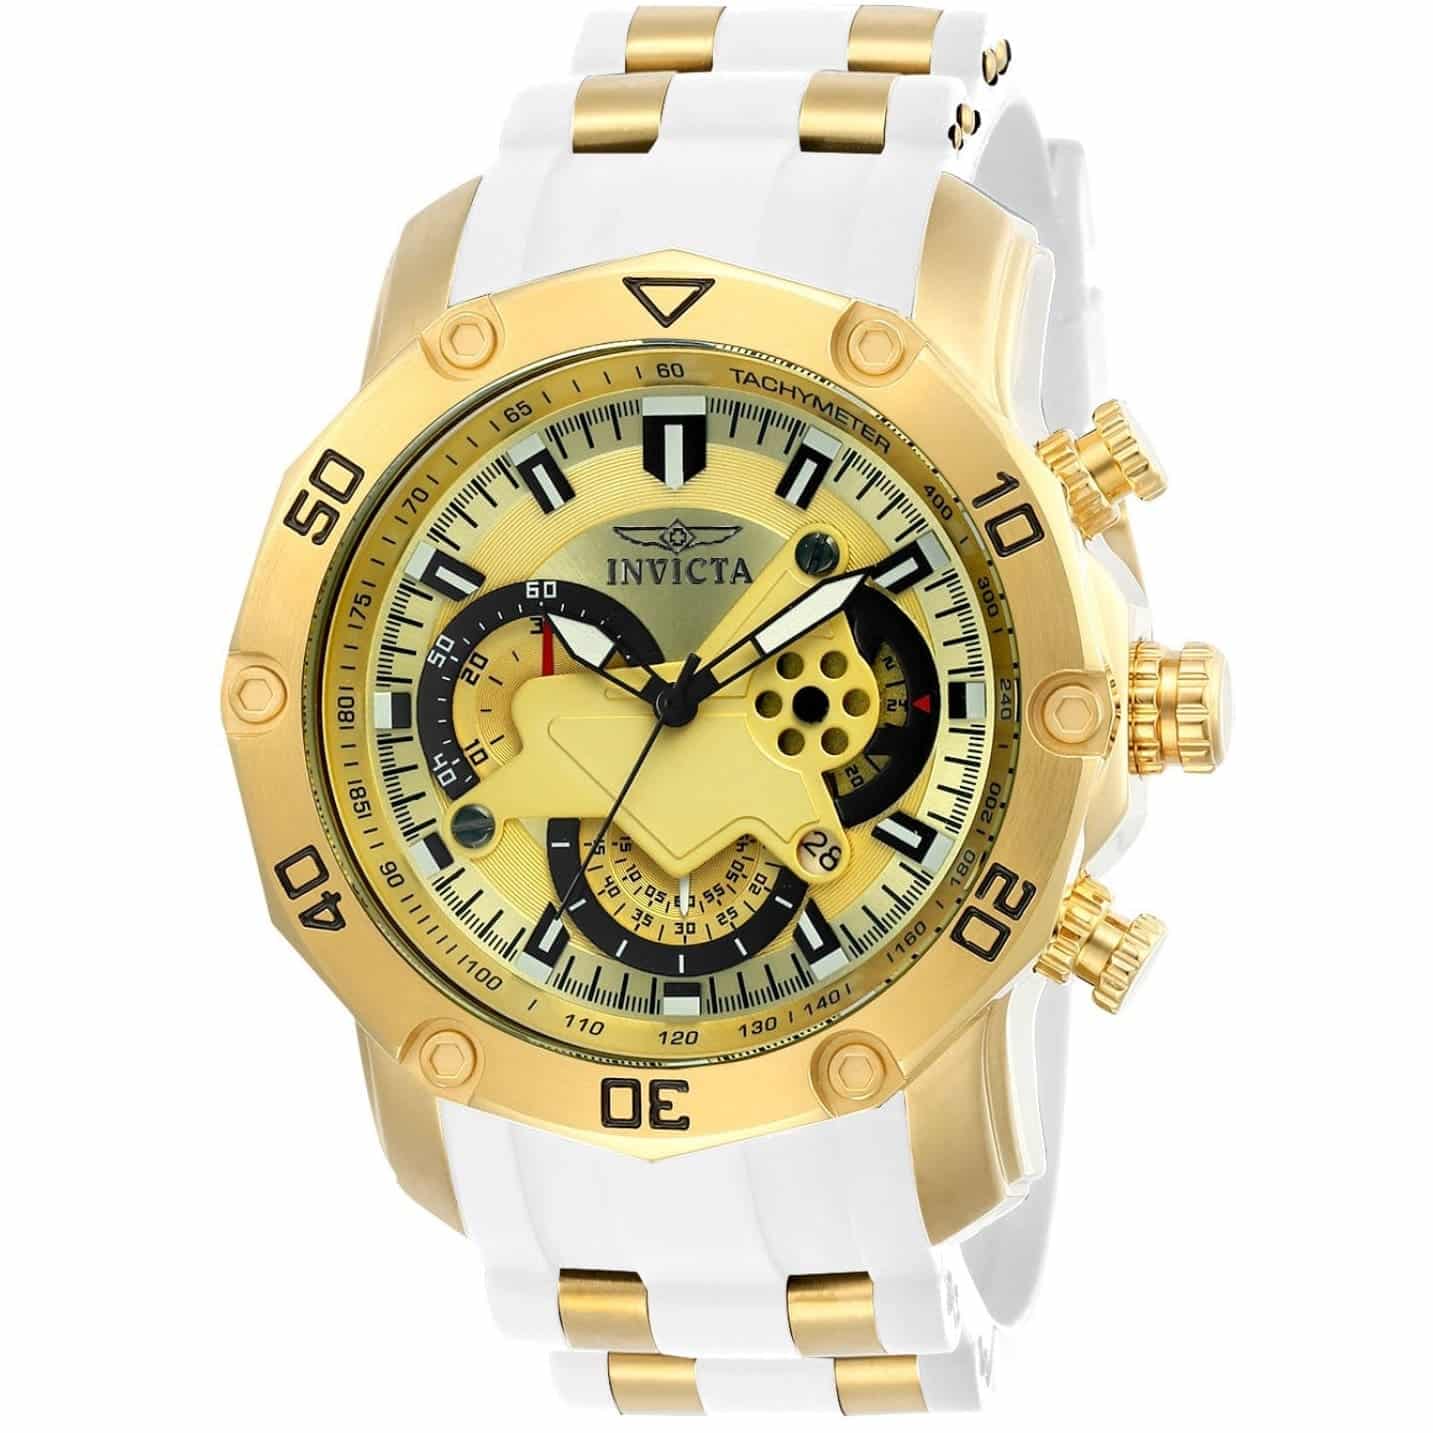 Invicta Diver White Gold 23424 reloj blanco dial dorado para hombre - TIME El Salvador